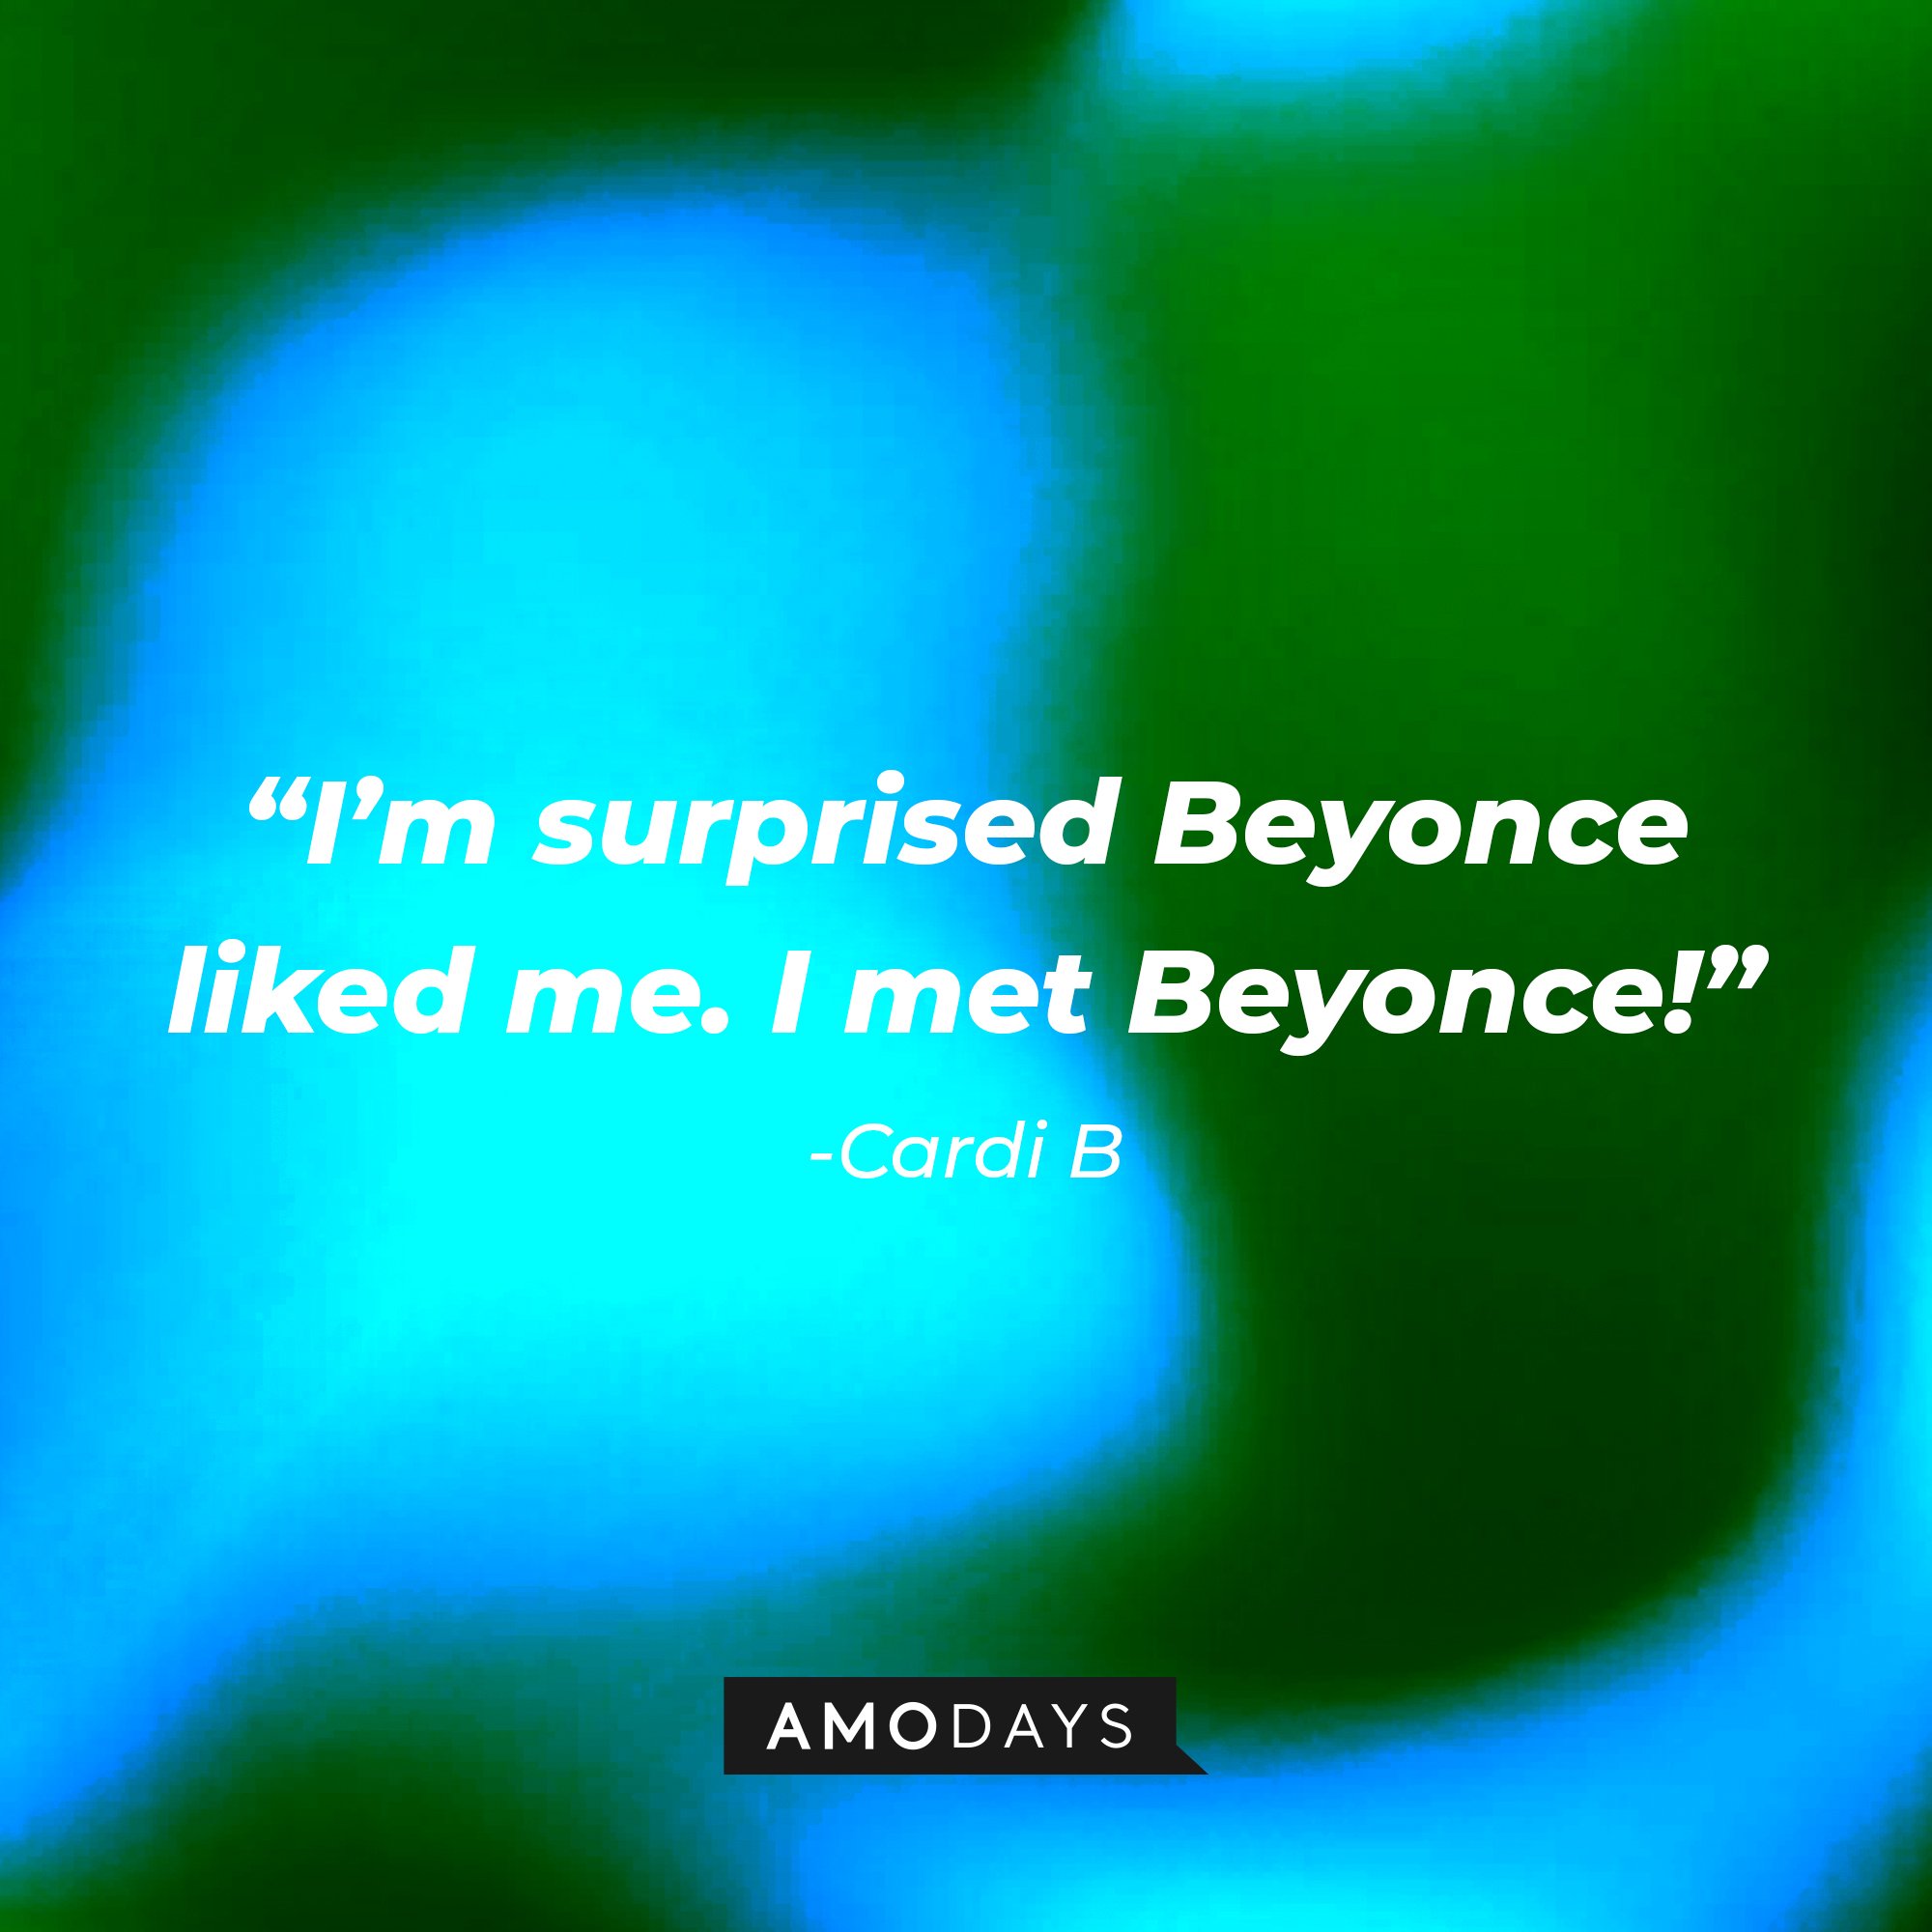 Cardi B's quotes: "I'm surprised Beyonce liked me. I met Beyonce!" | Image: AmoDays